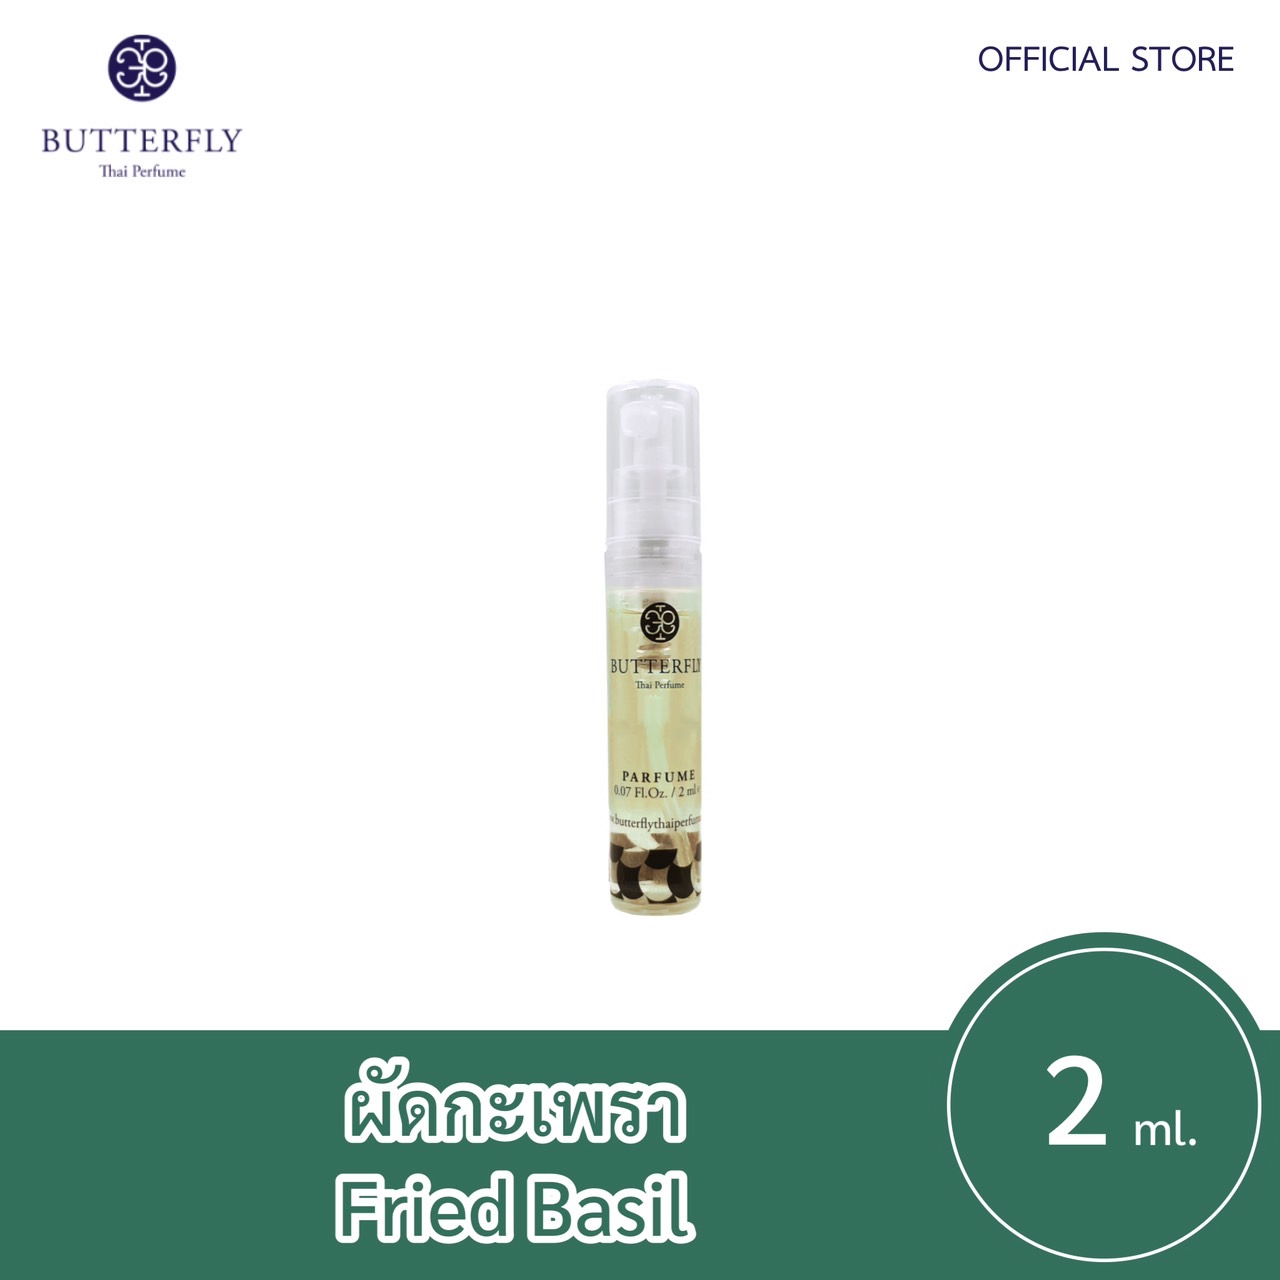 Butterfly Thai Perfume - น้ำหอมบัตเตอร์ฟลาย ไทย เพอร์ฟูม  ขนาดทดลอง 2ml.  กลิ่น ์New ผัดกะเพราปริมาณ (มล.) 2